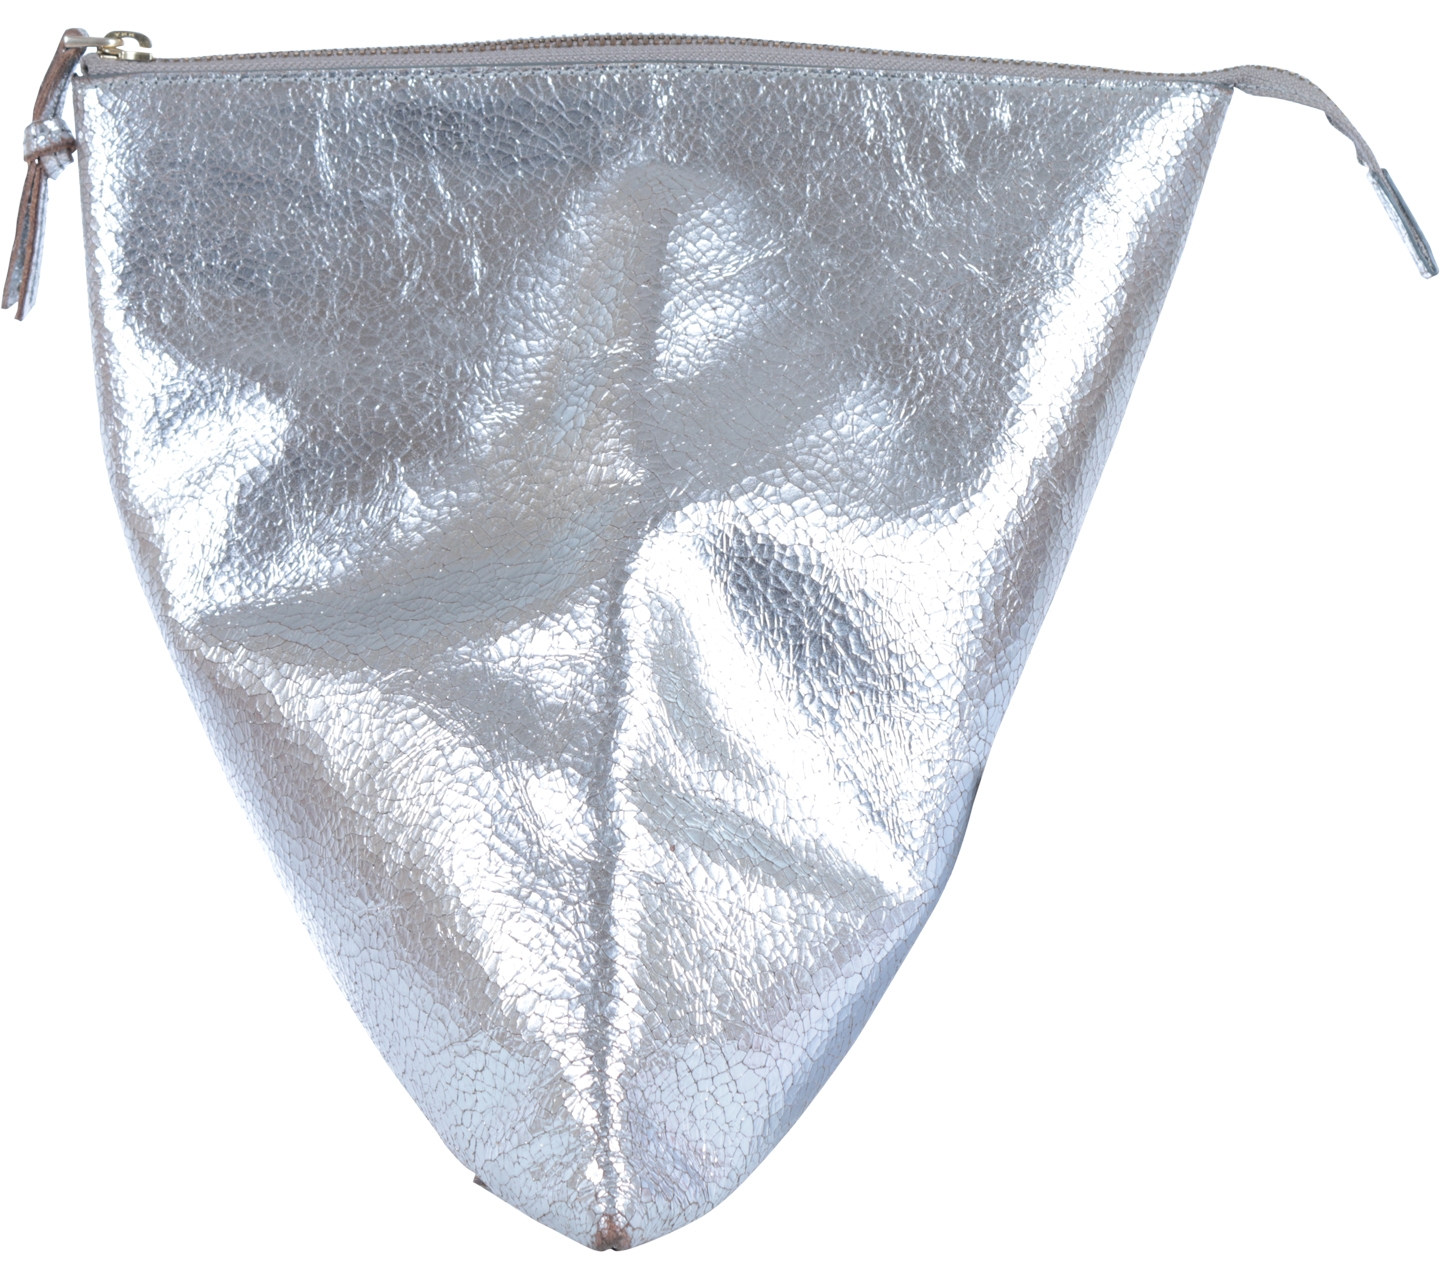 Marc Jacobs Silver Diamond Clutch